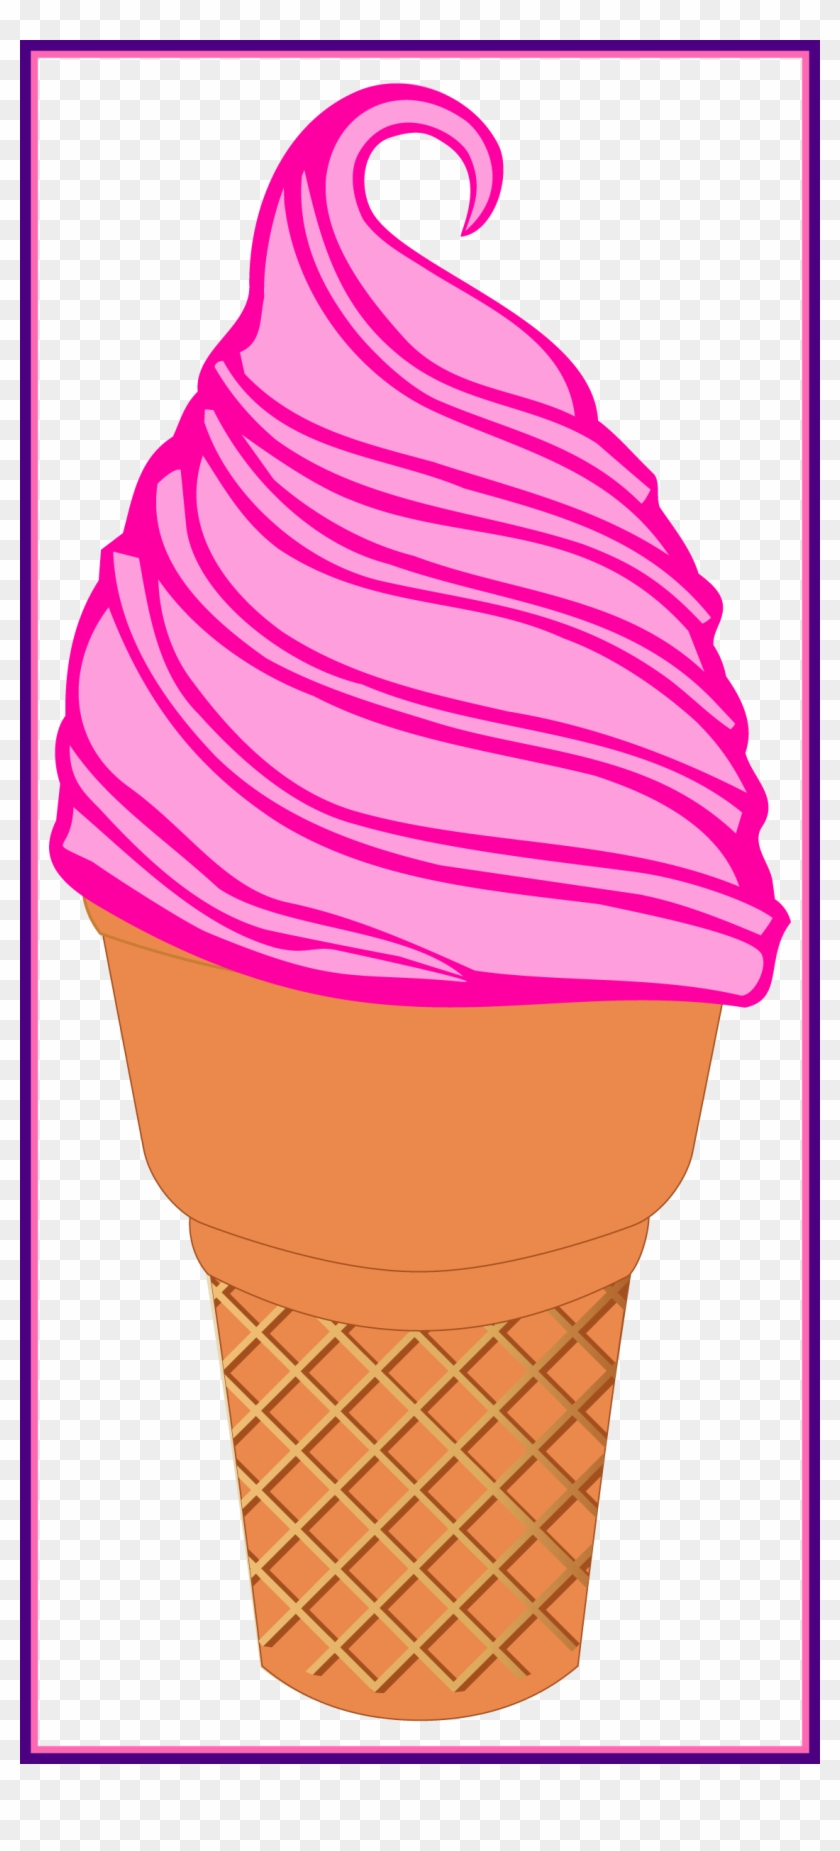 No Ice Cream Icon. Forbidding Sign Clipart. Vector Illustration - Clip ...